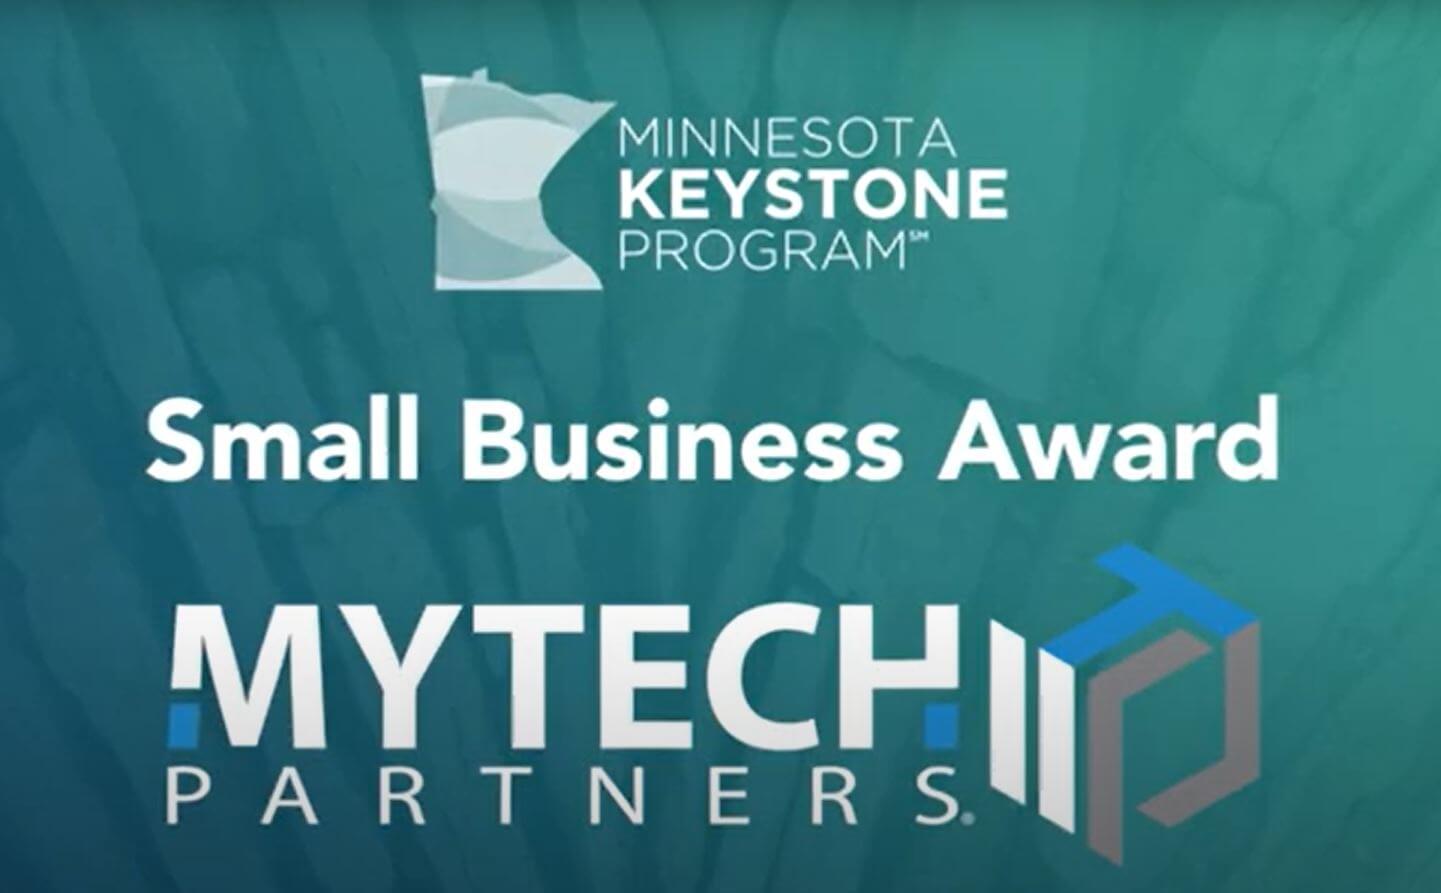 Graphic of Minnesota Keystone Program's Small Business Award & Mytech Partners logo